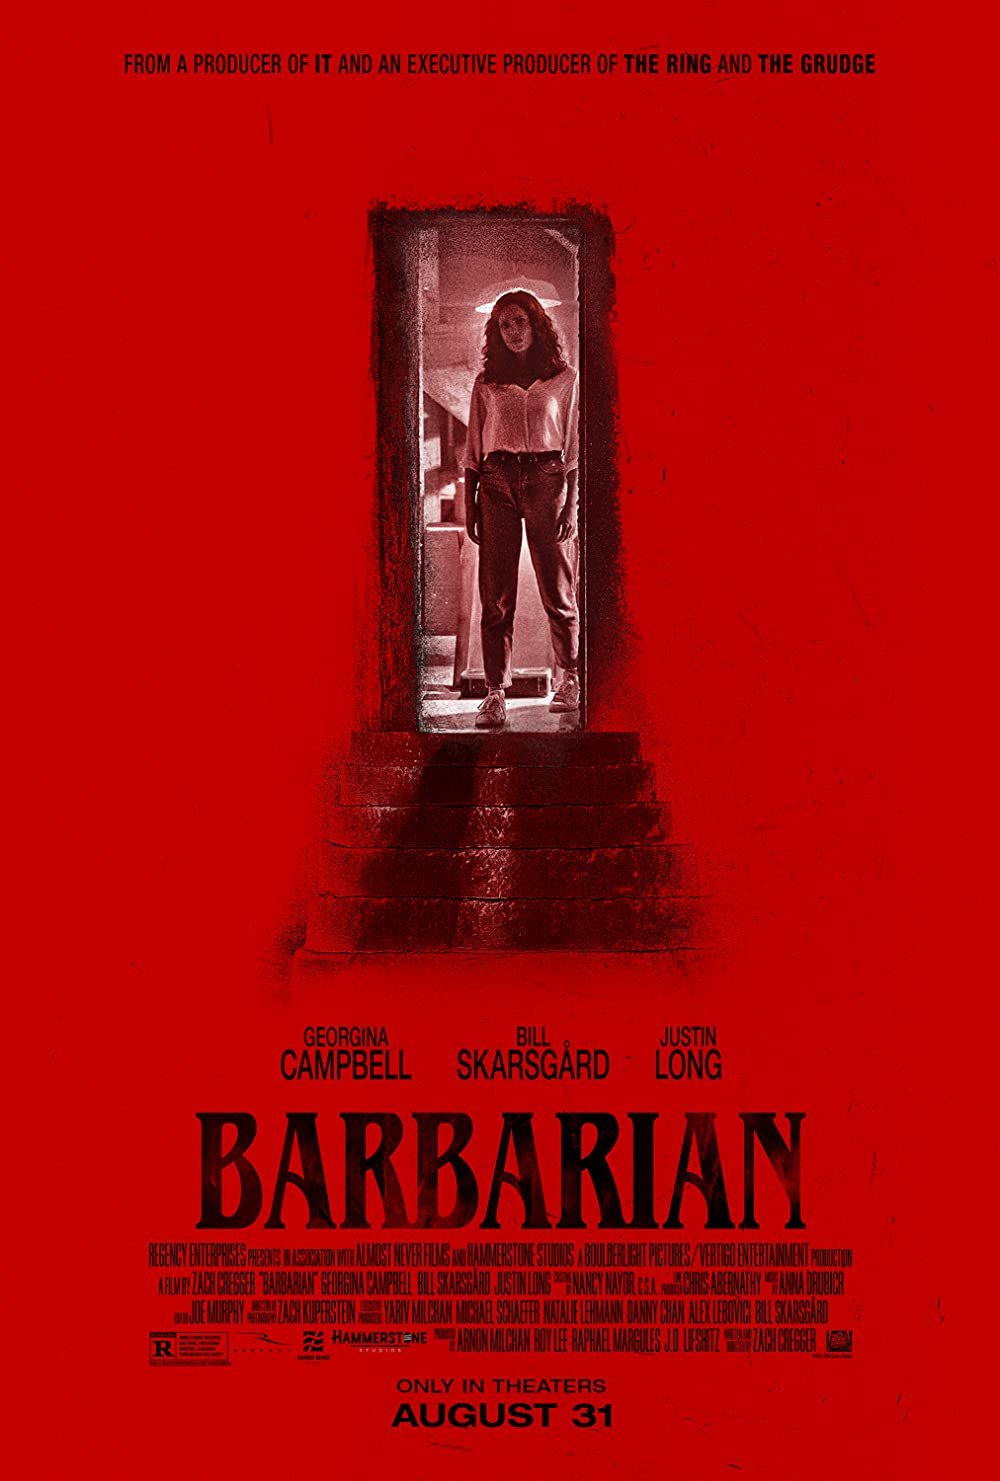 Barbarian images © 20th Century Studios